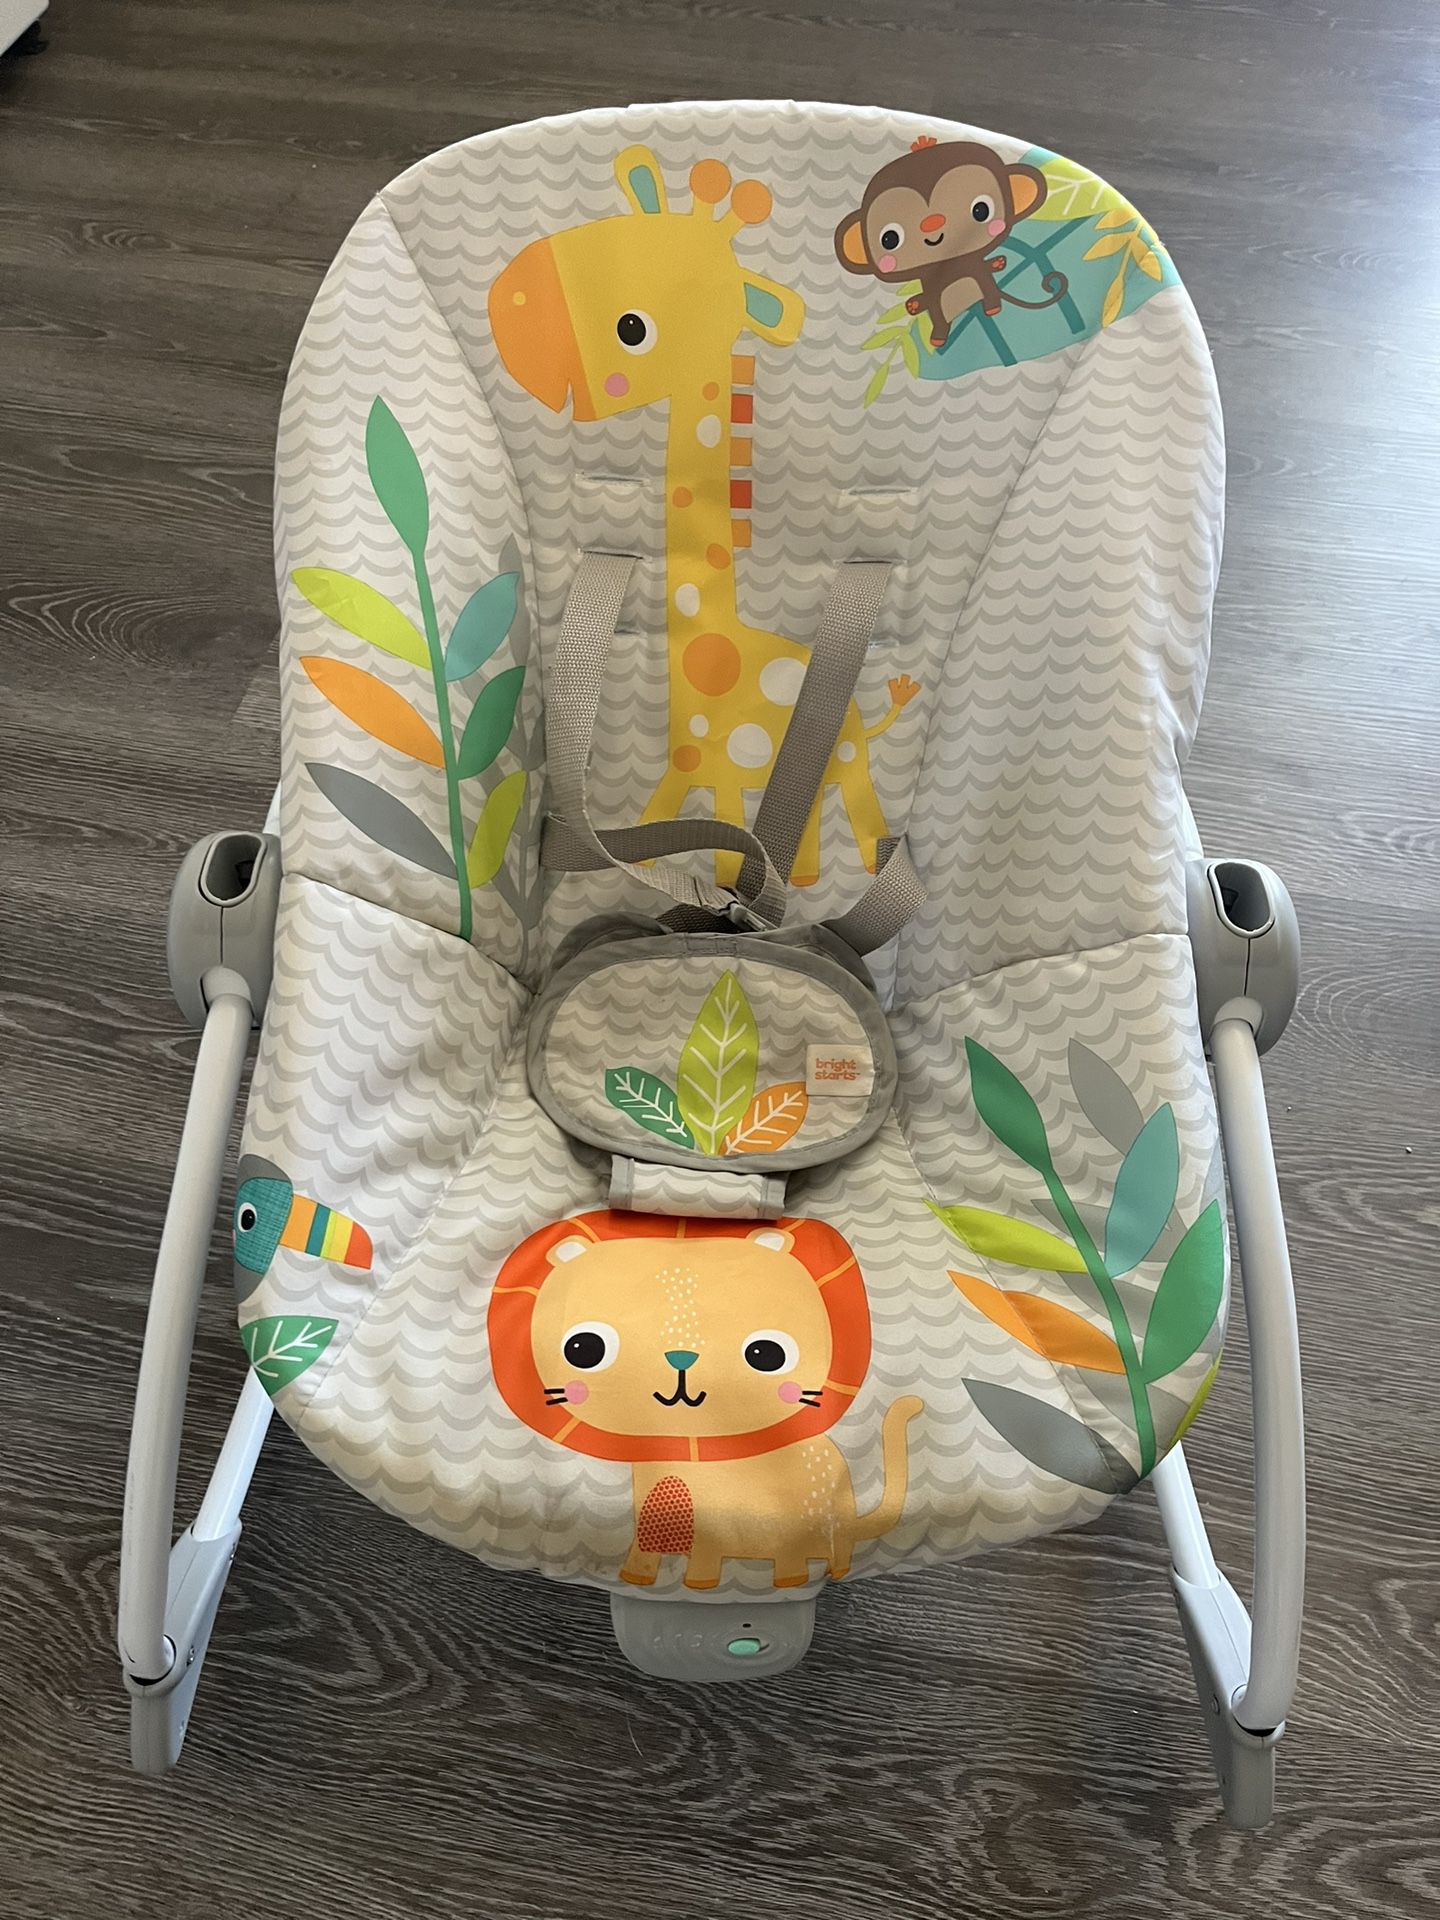 Infant Vibrating Seat